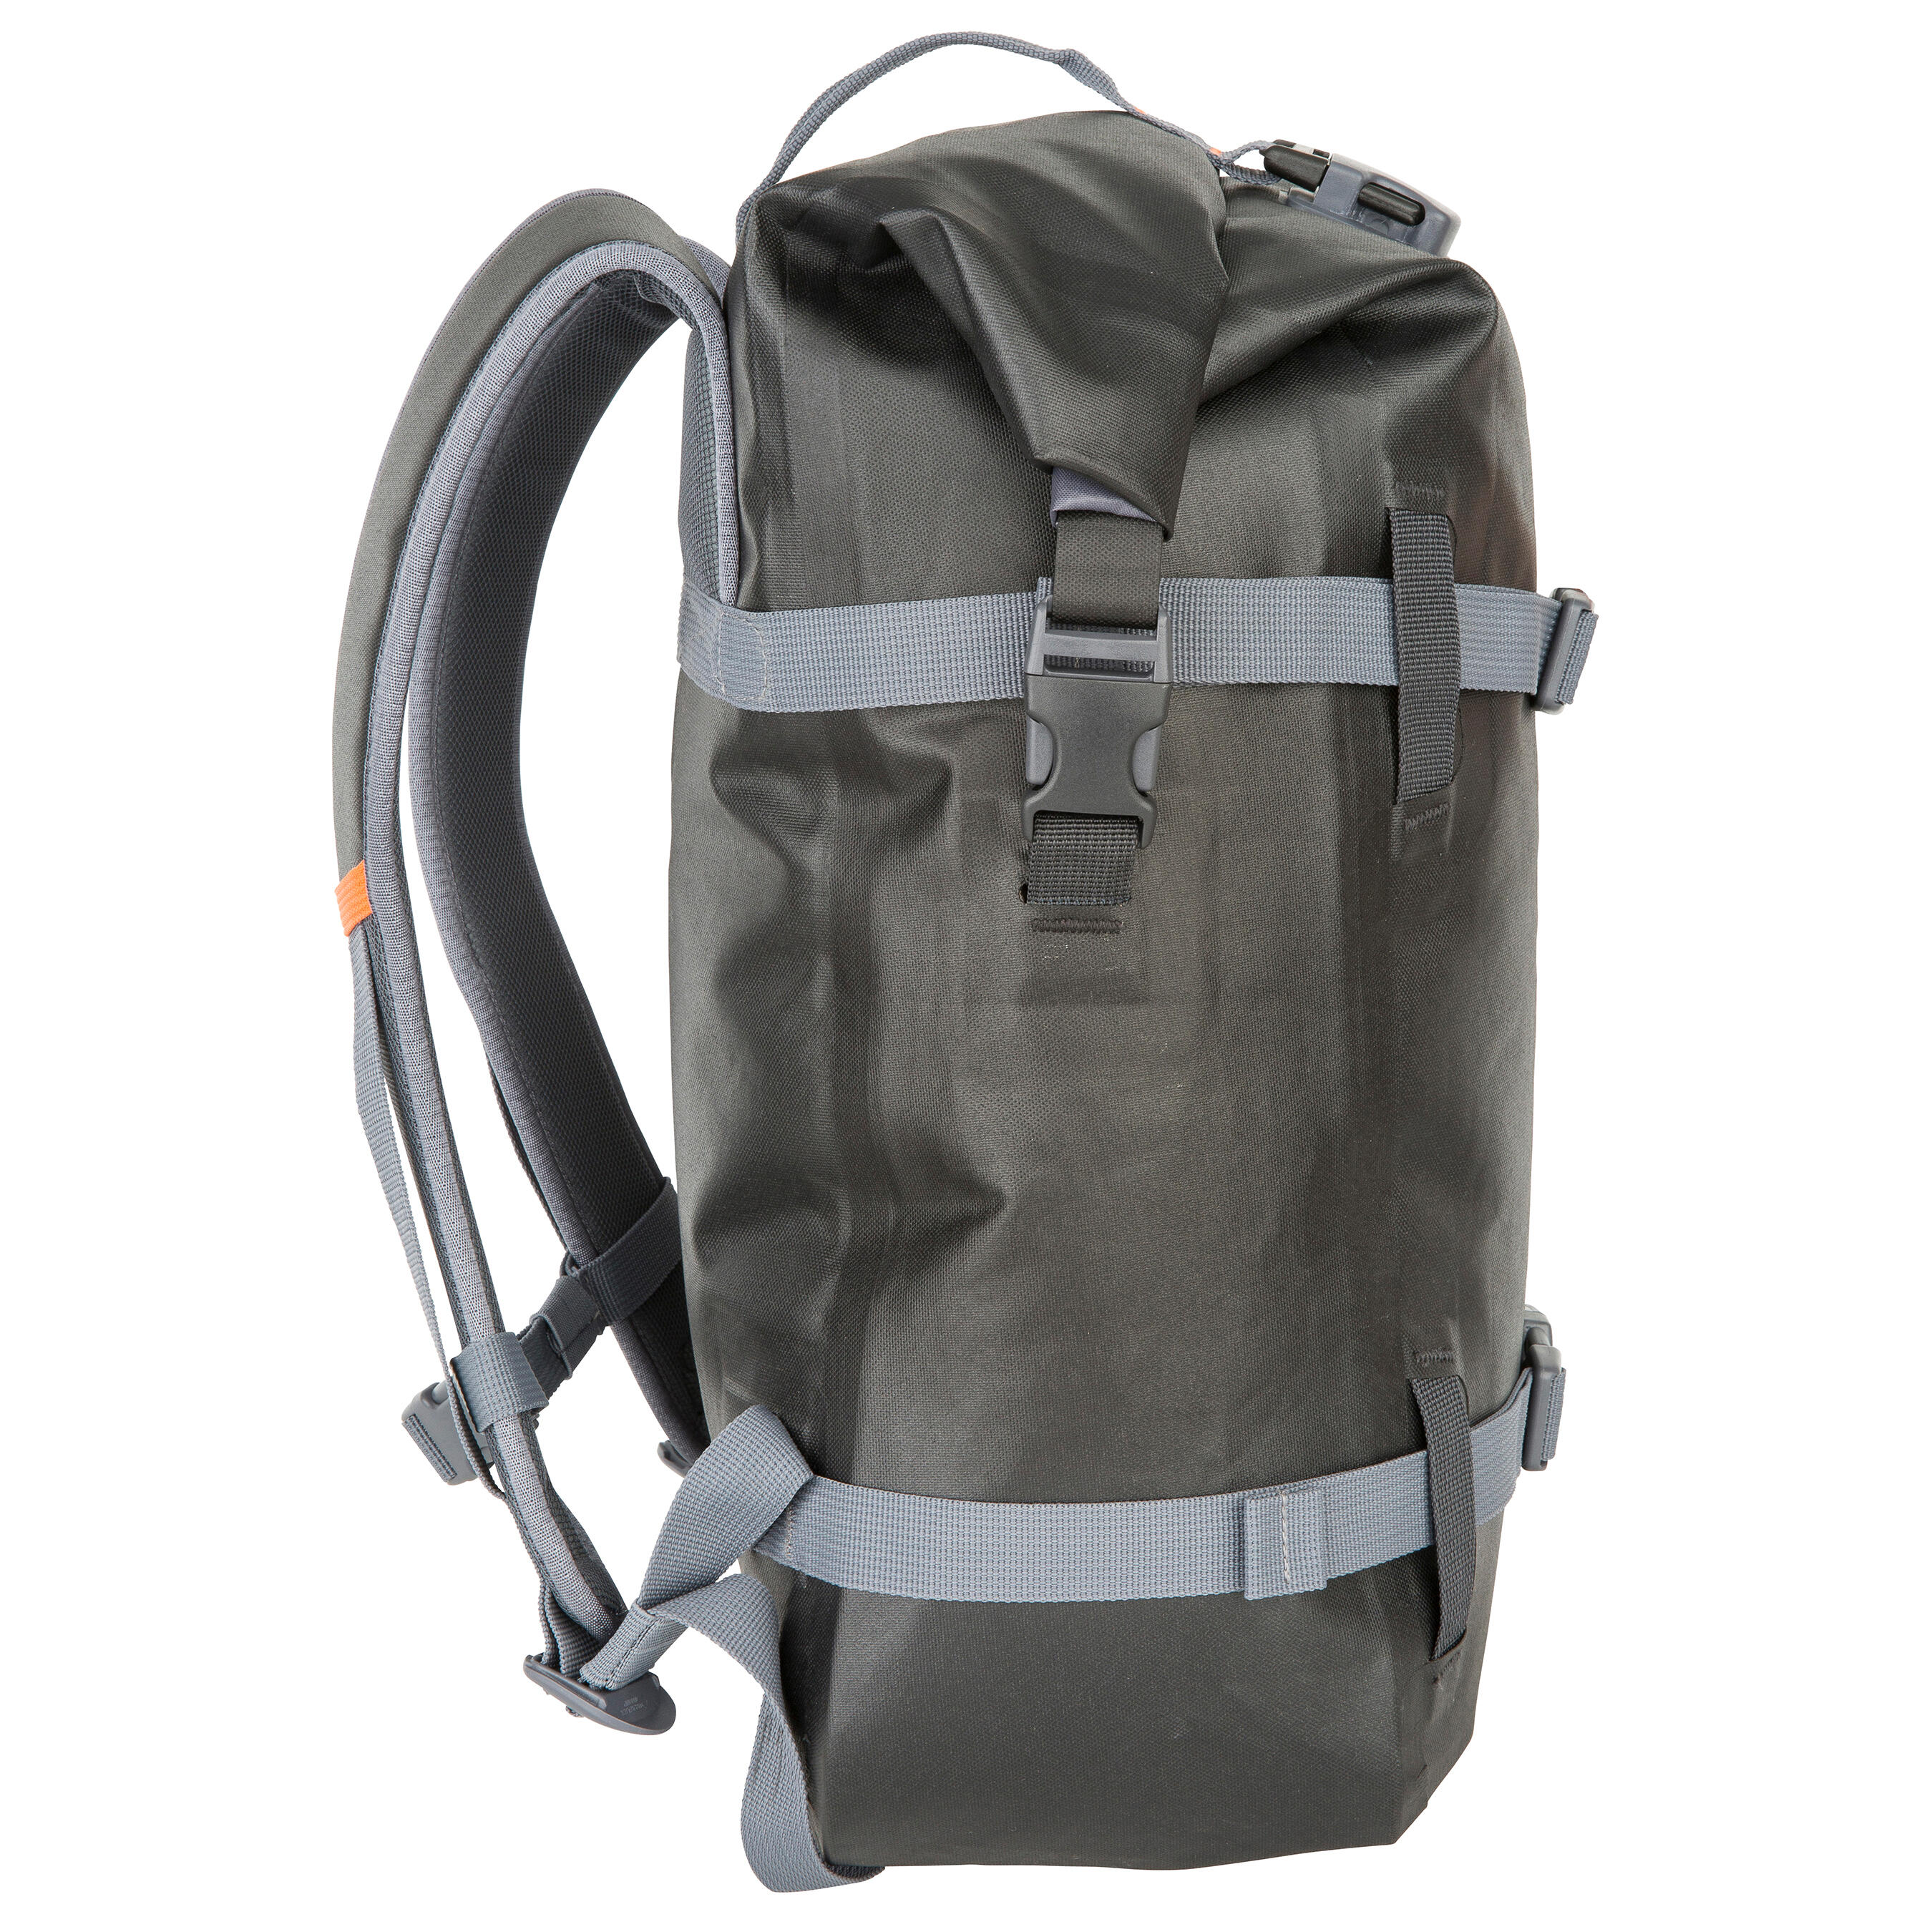 Waterproof Backpack 20L - Black - Carbon grey - Itiwit - Decathlon